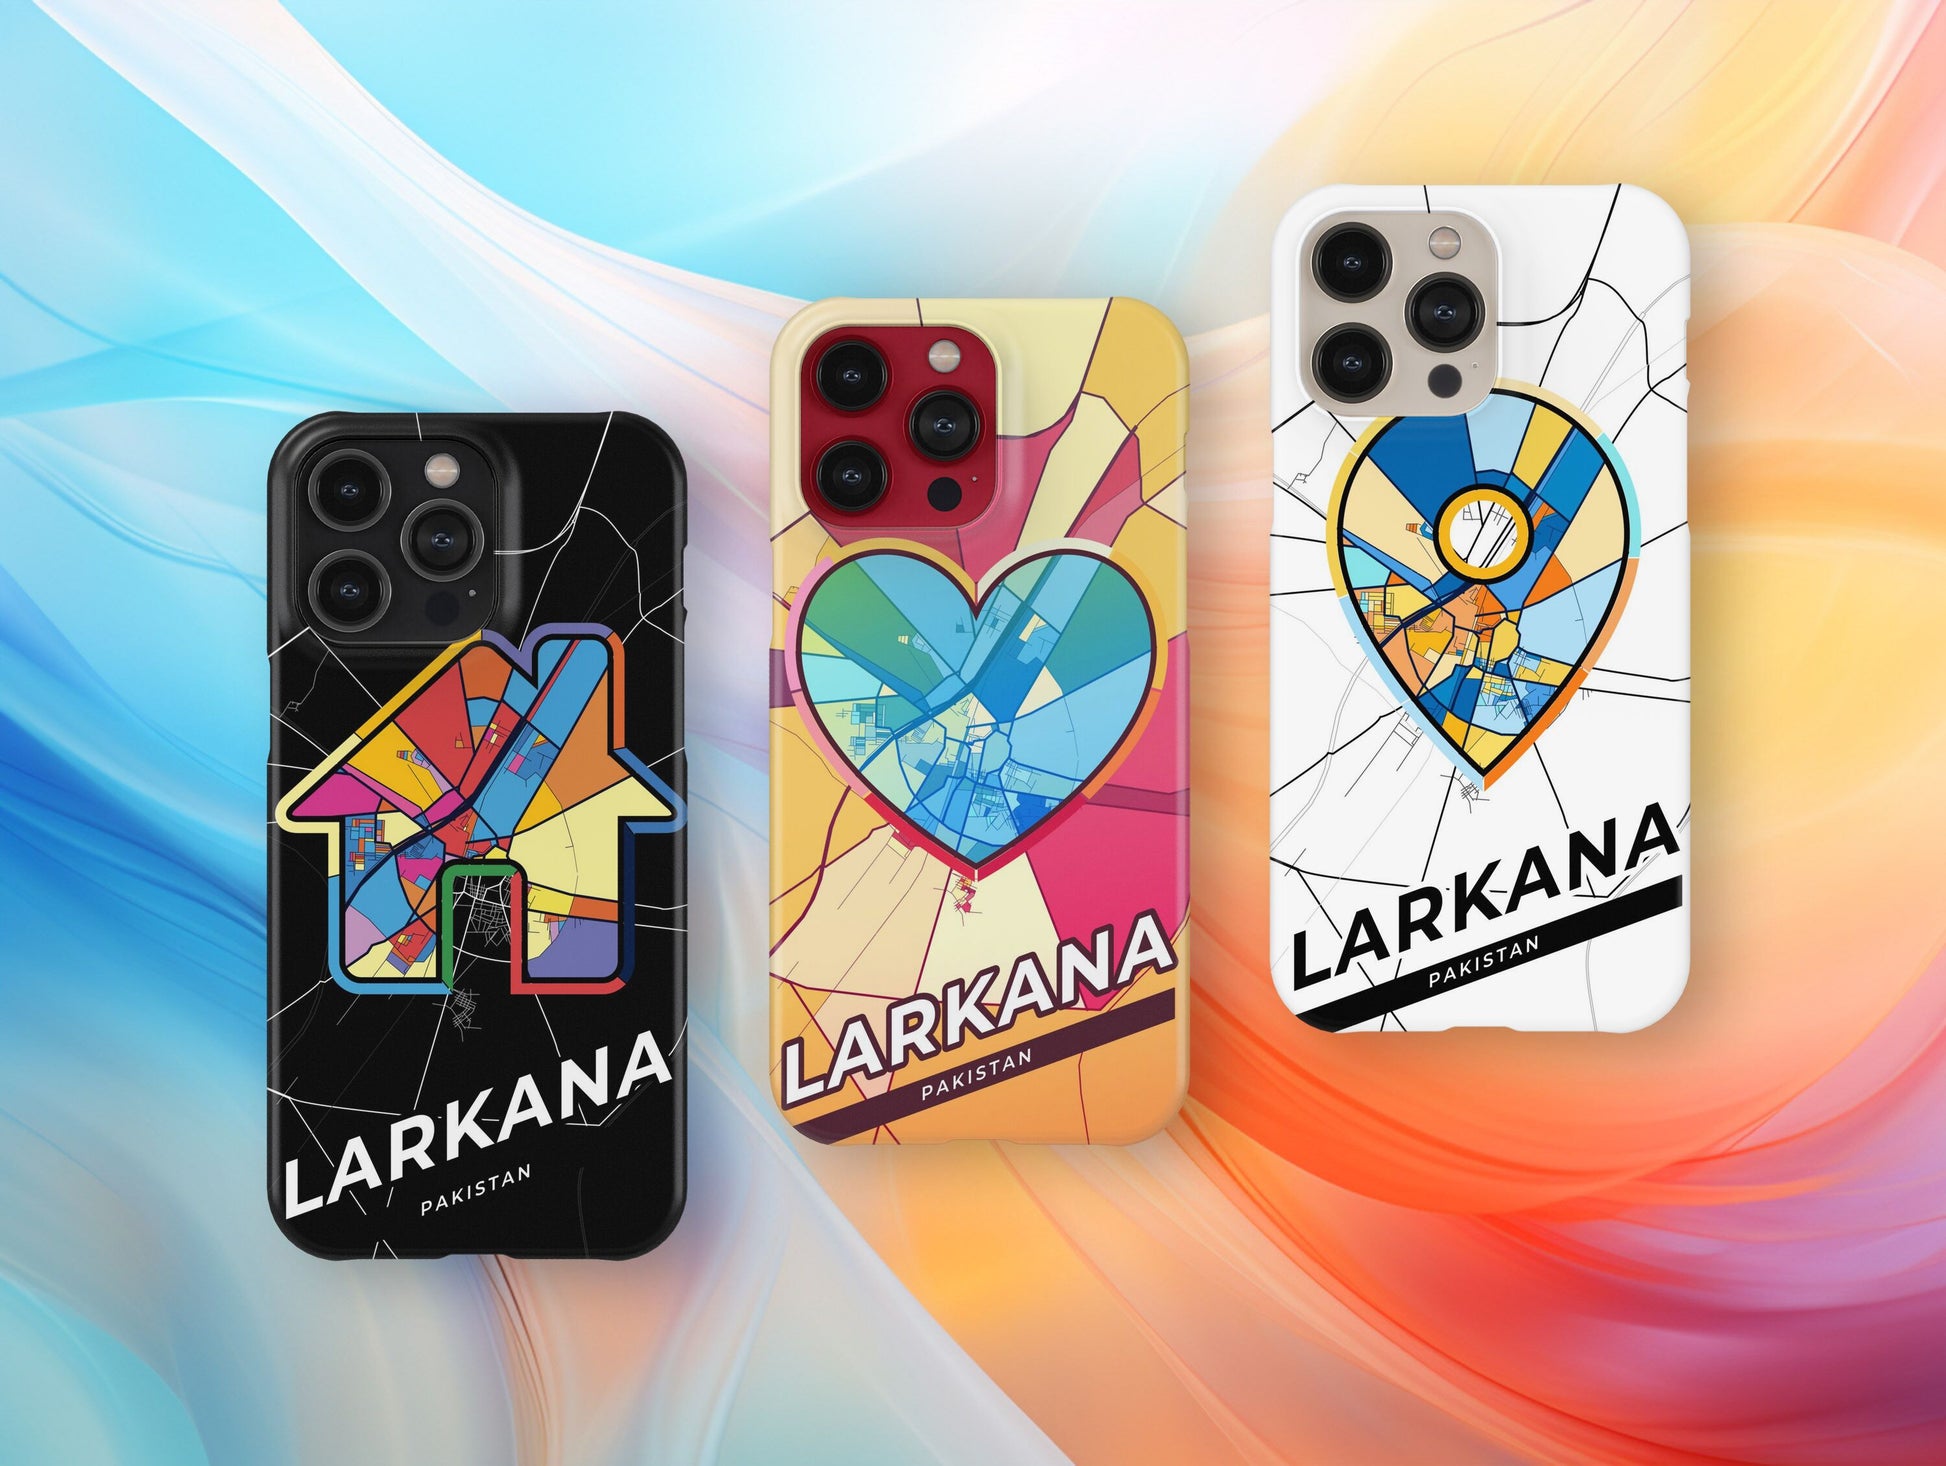 Larkana Pakistan slim phone case with colorful icon. Birthday, wedding or housewarming gift. Couple match cases.